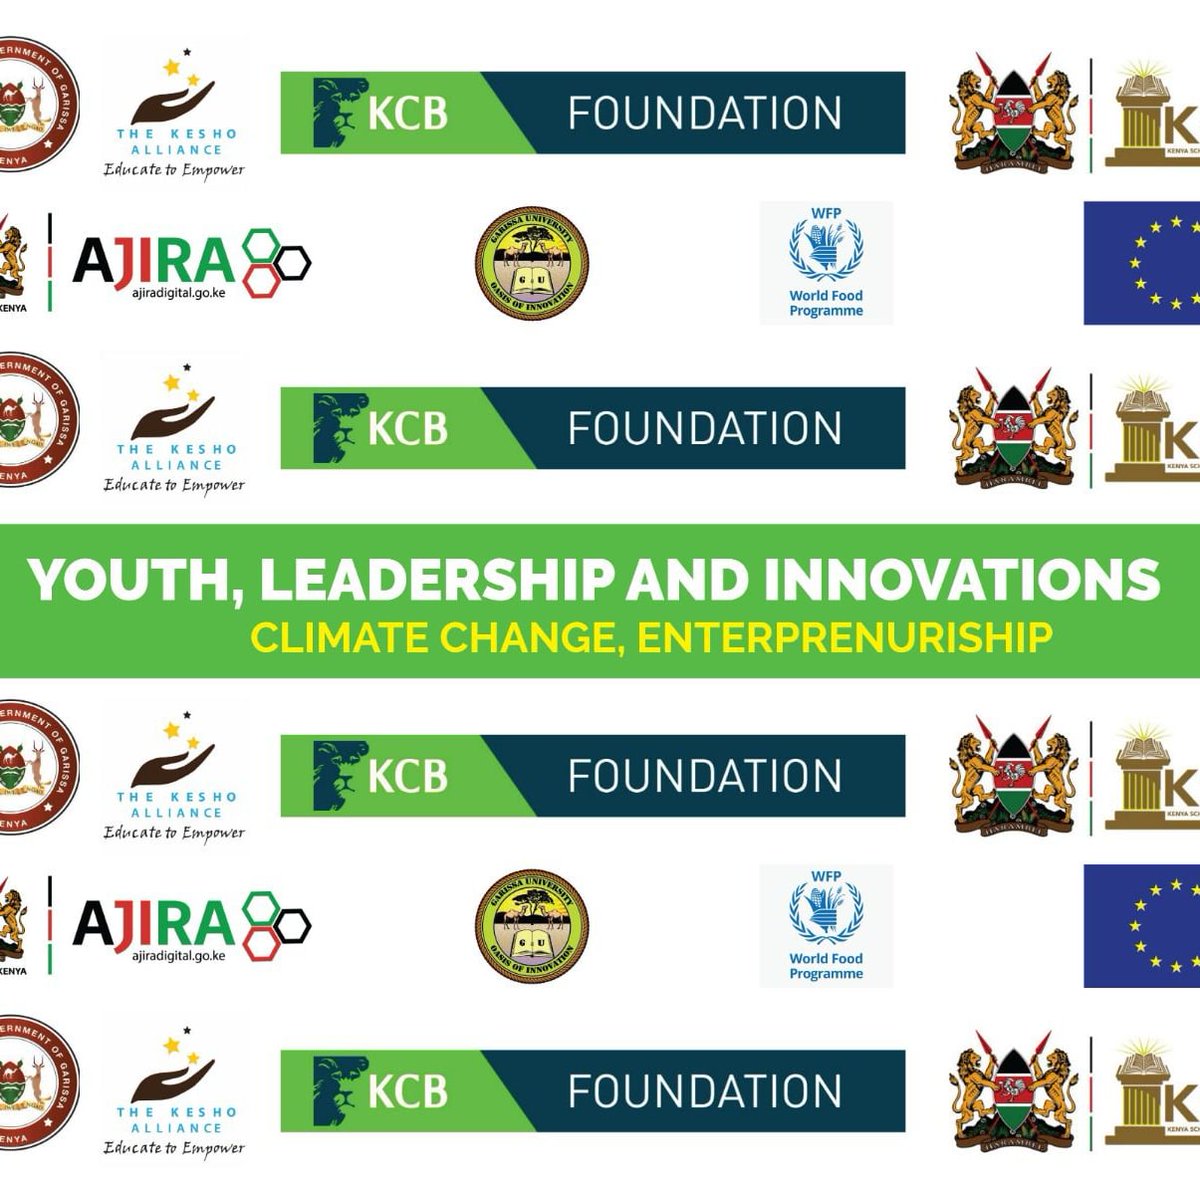 The Biggest youth Convention in Kenya will be happening tomorrow in courtesy of @GarissaGov, @KSGKenya, @KCBFoundation, @EuropeanUnion36, @GarissaCounty, @WFP_Kenya @Agiradigital @UNDPKenya